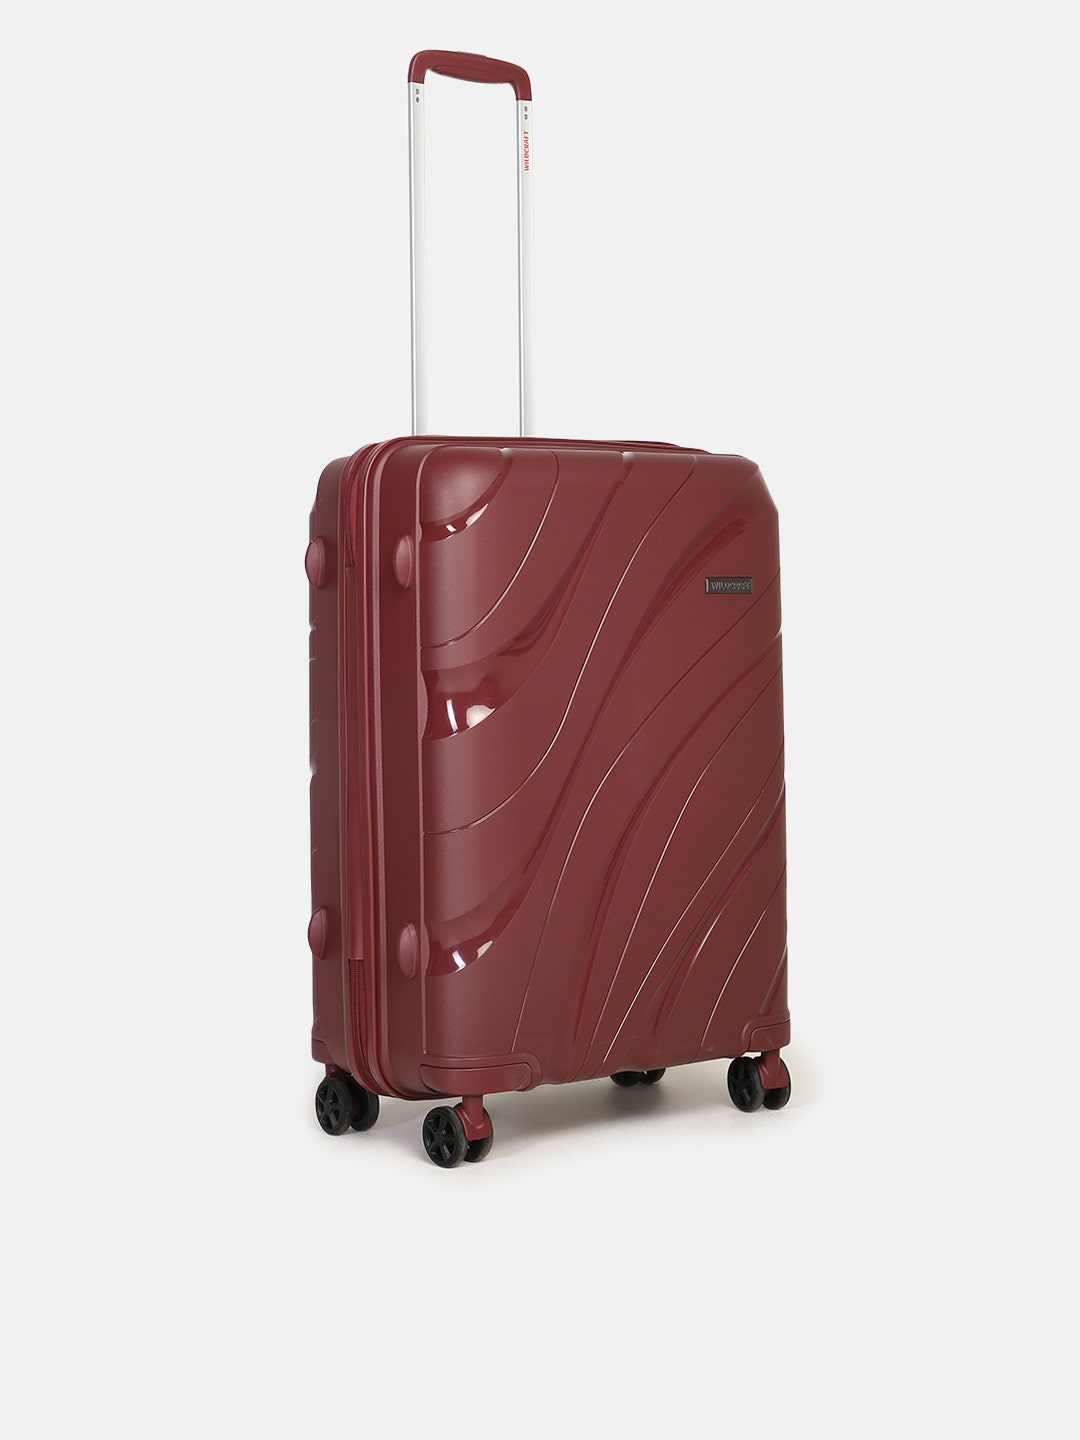 Wildcraft Agena Hard Trolley Suitcase (12430)